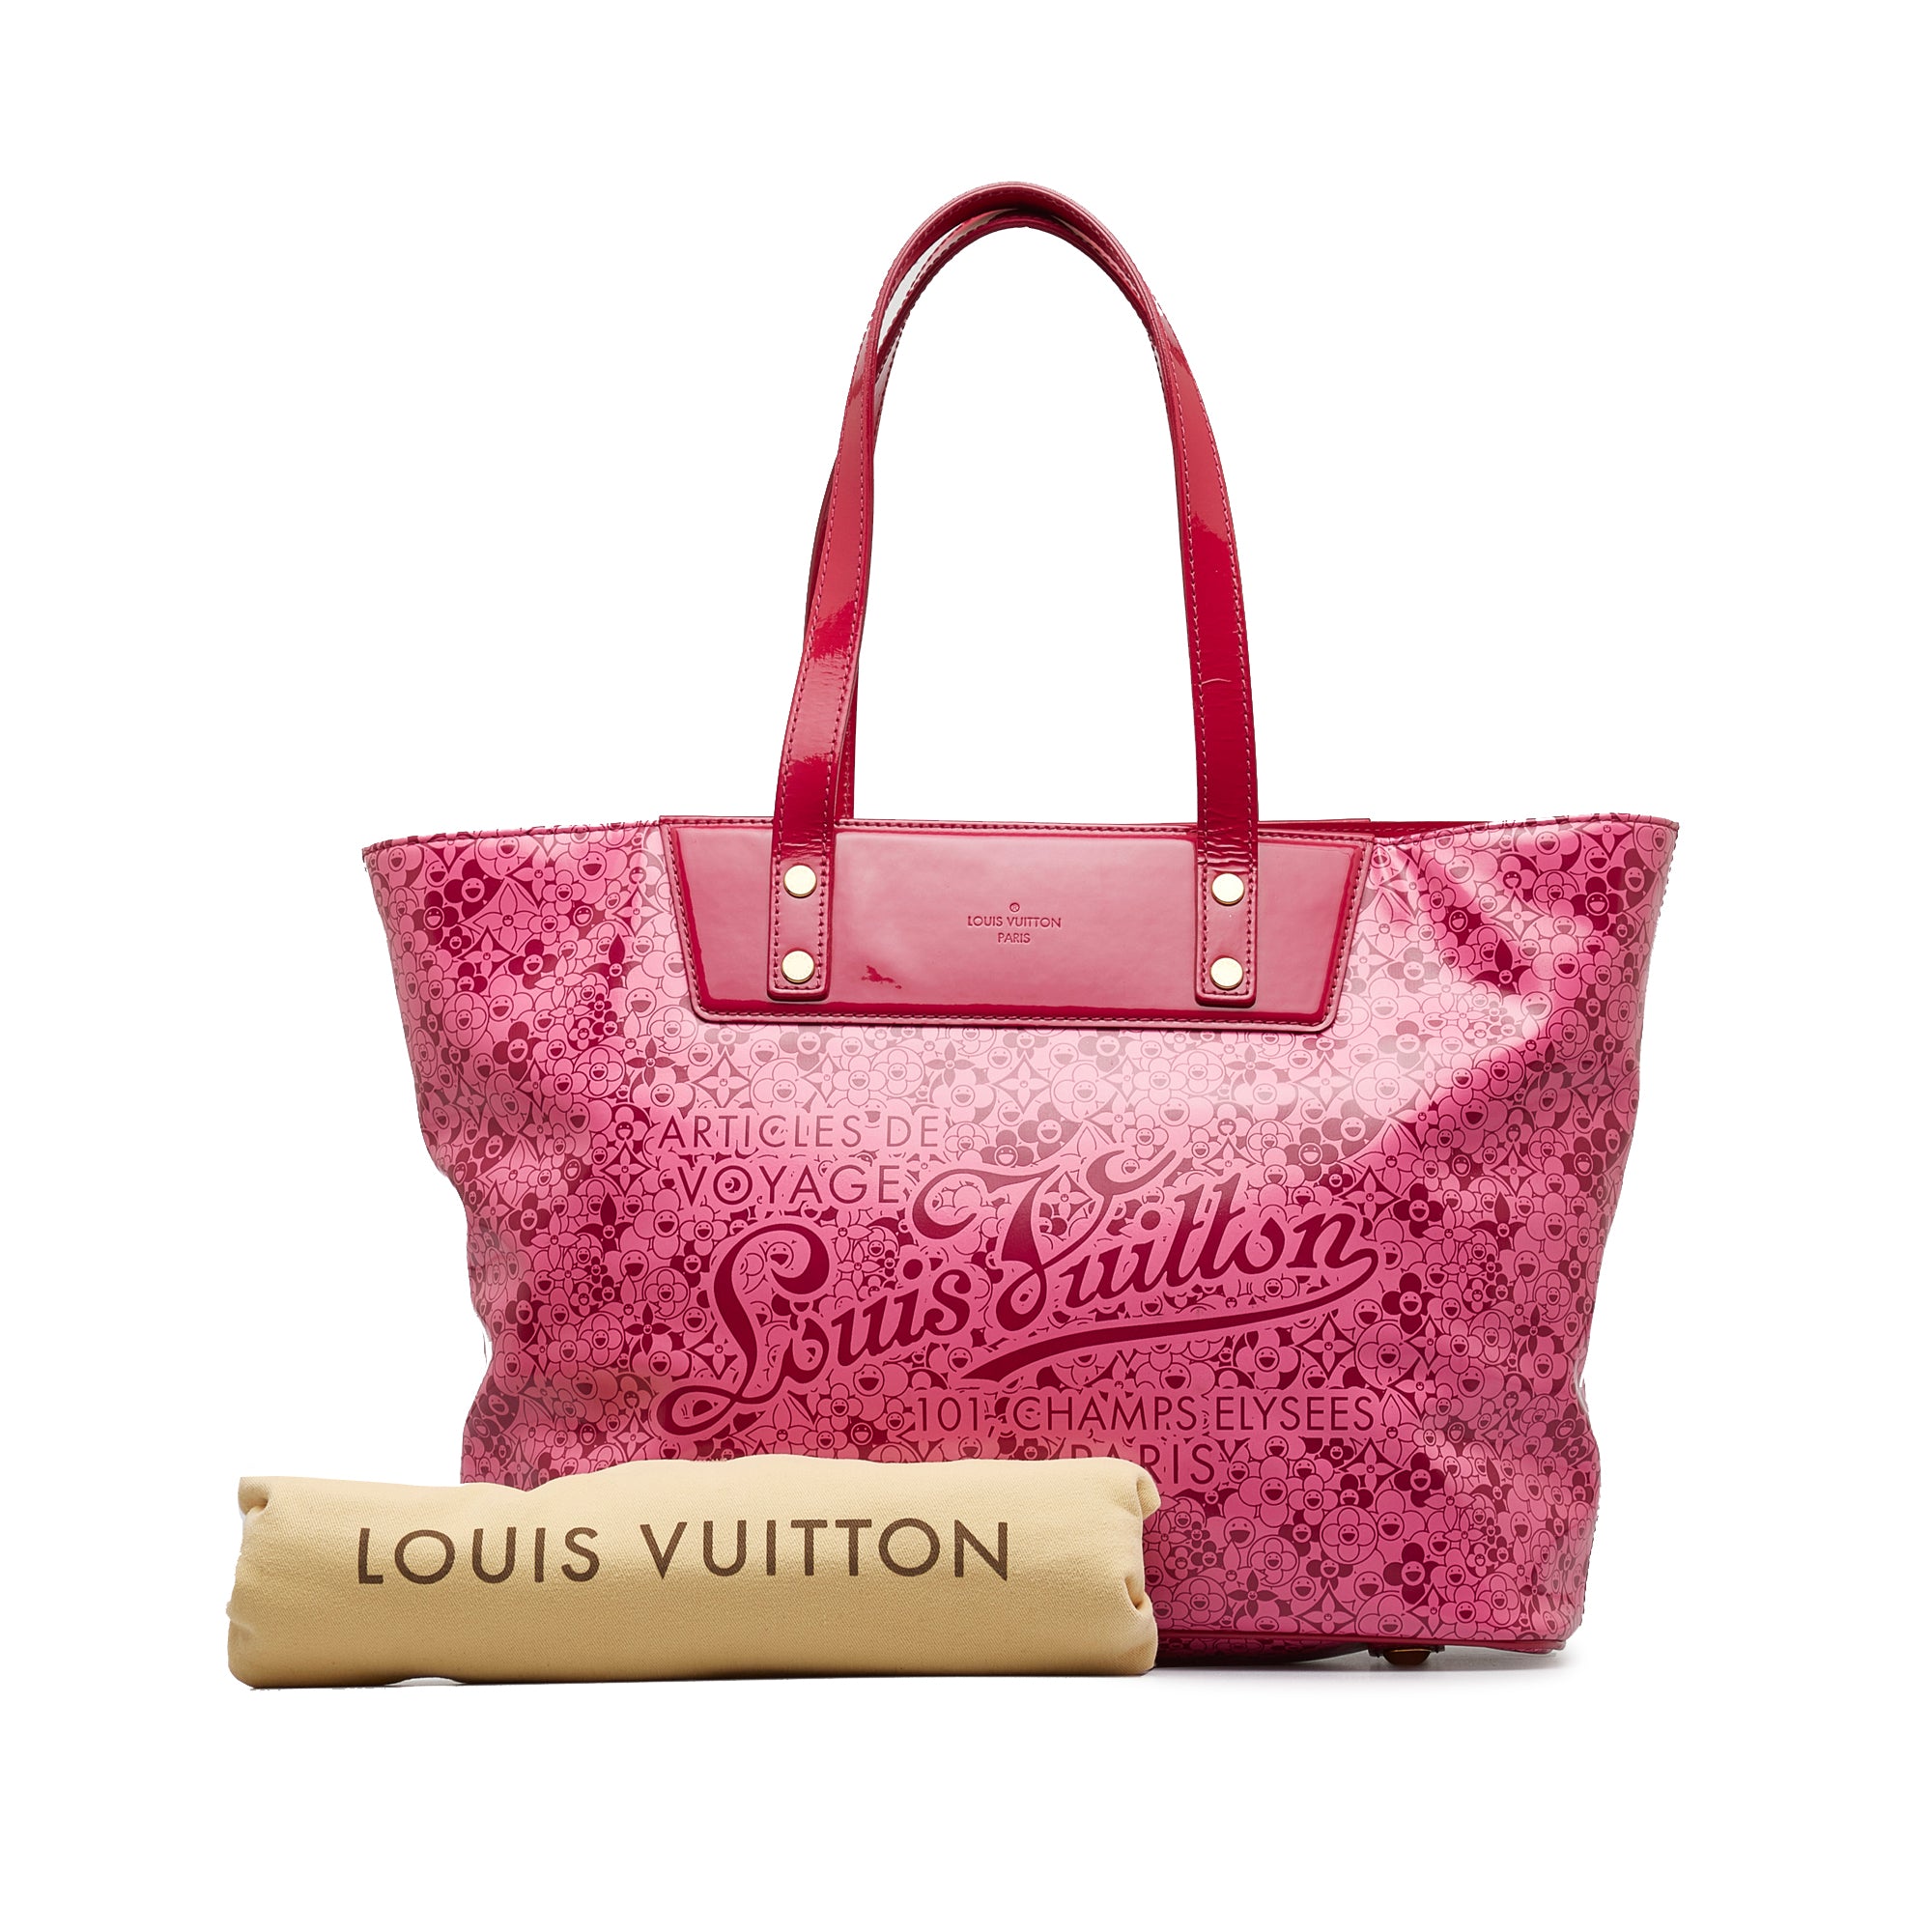 Supreme x Louis Vuitton Key Investment Items